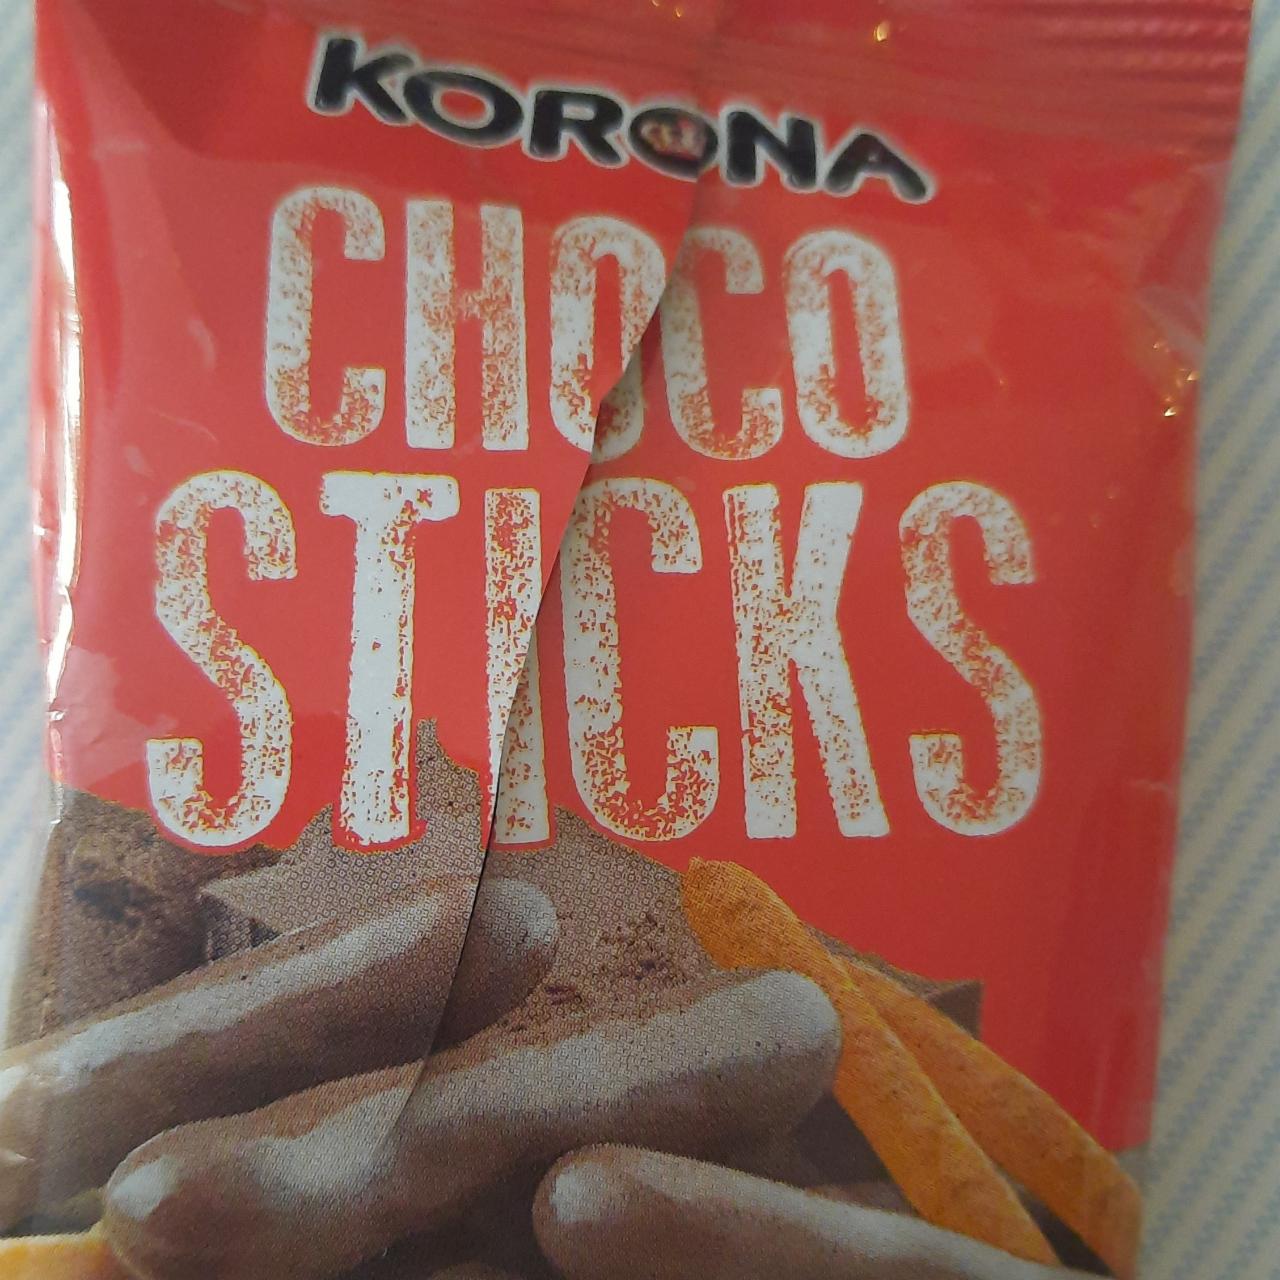 Fotografie - Choco sticks Korona